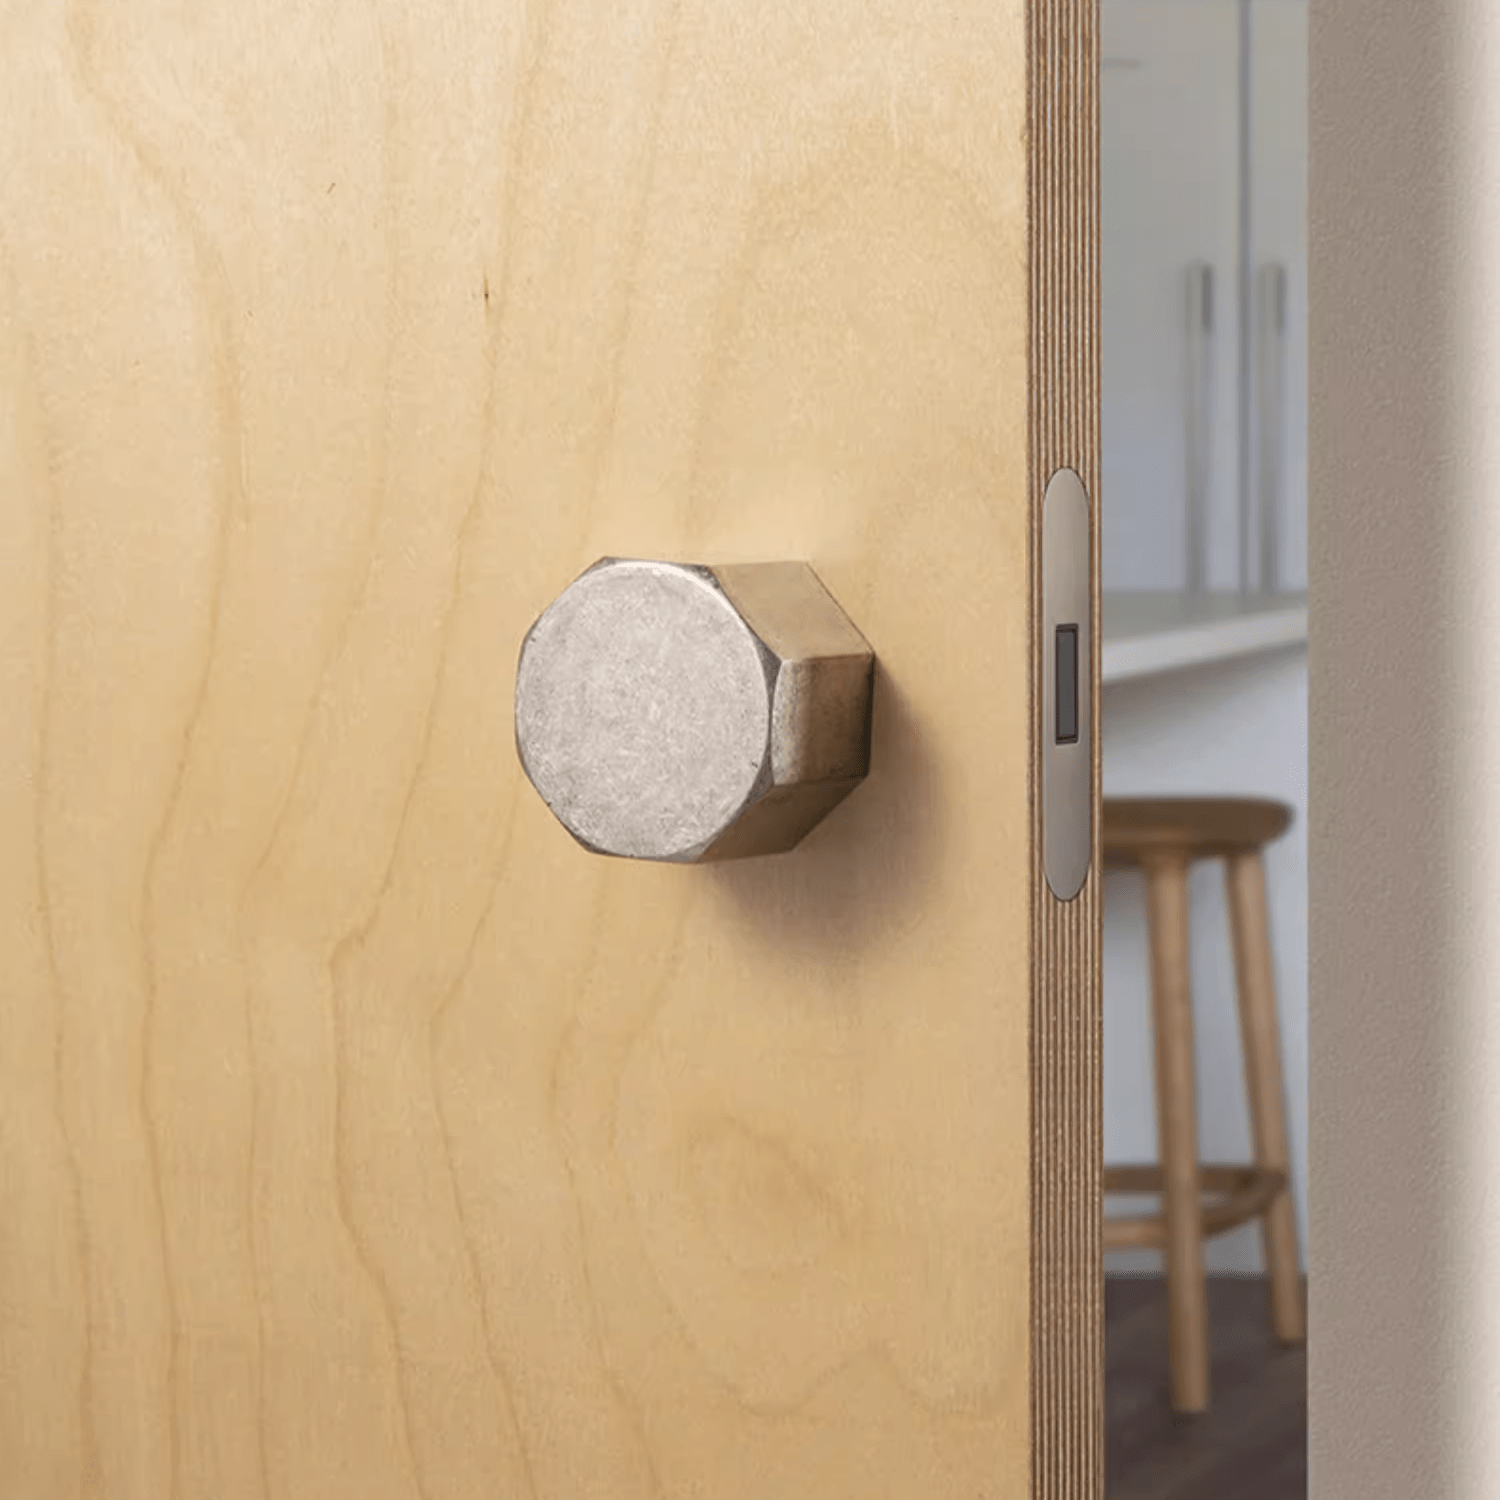 Goo-Ki Antique Silver / Fake Lock Octagonal Antique Silver Door Lock Security Rotatable Interior Keyless Door Lock